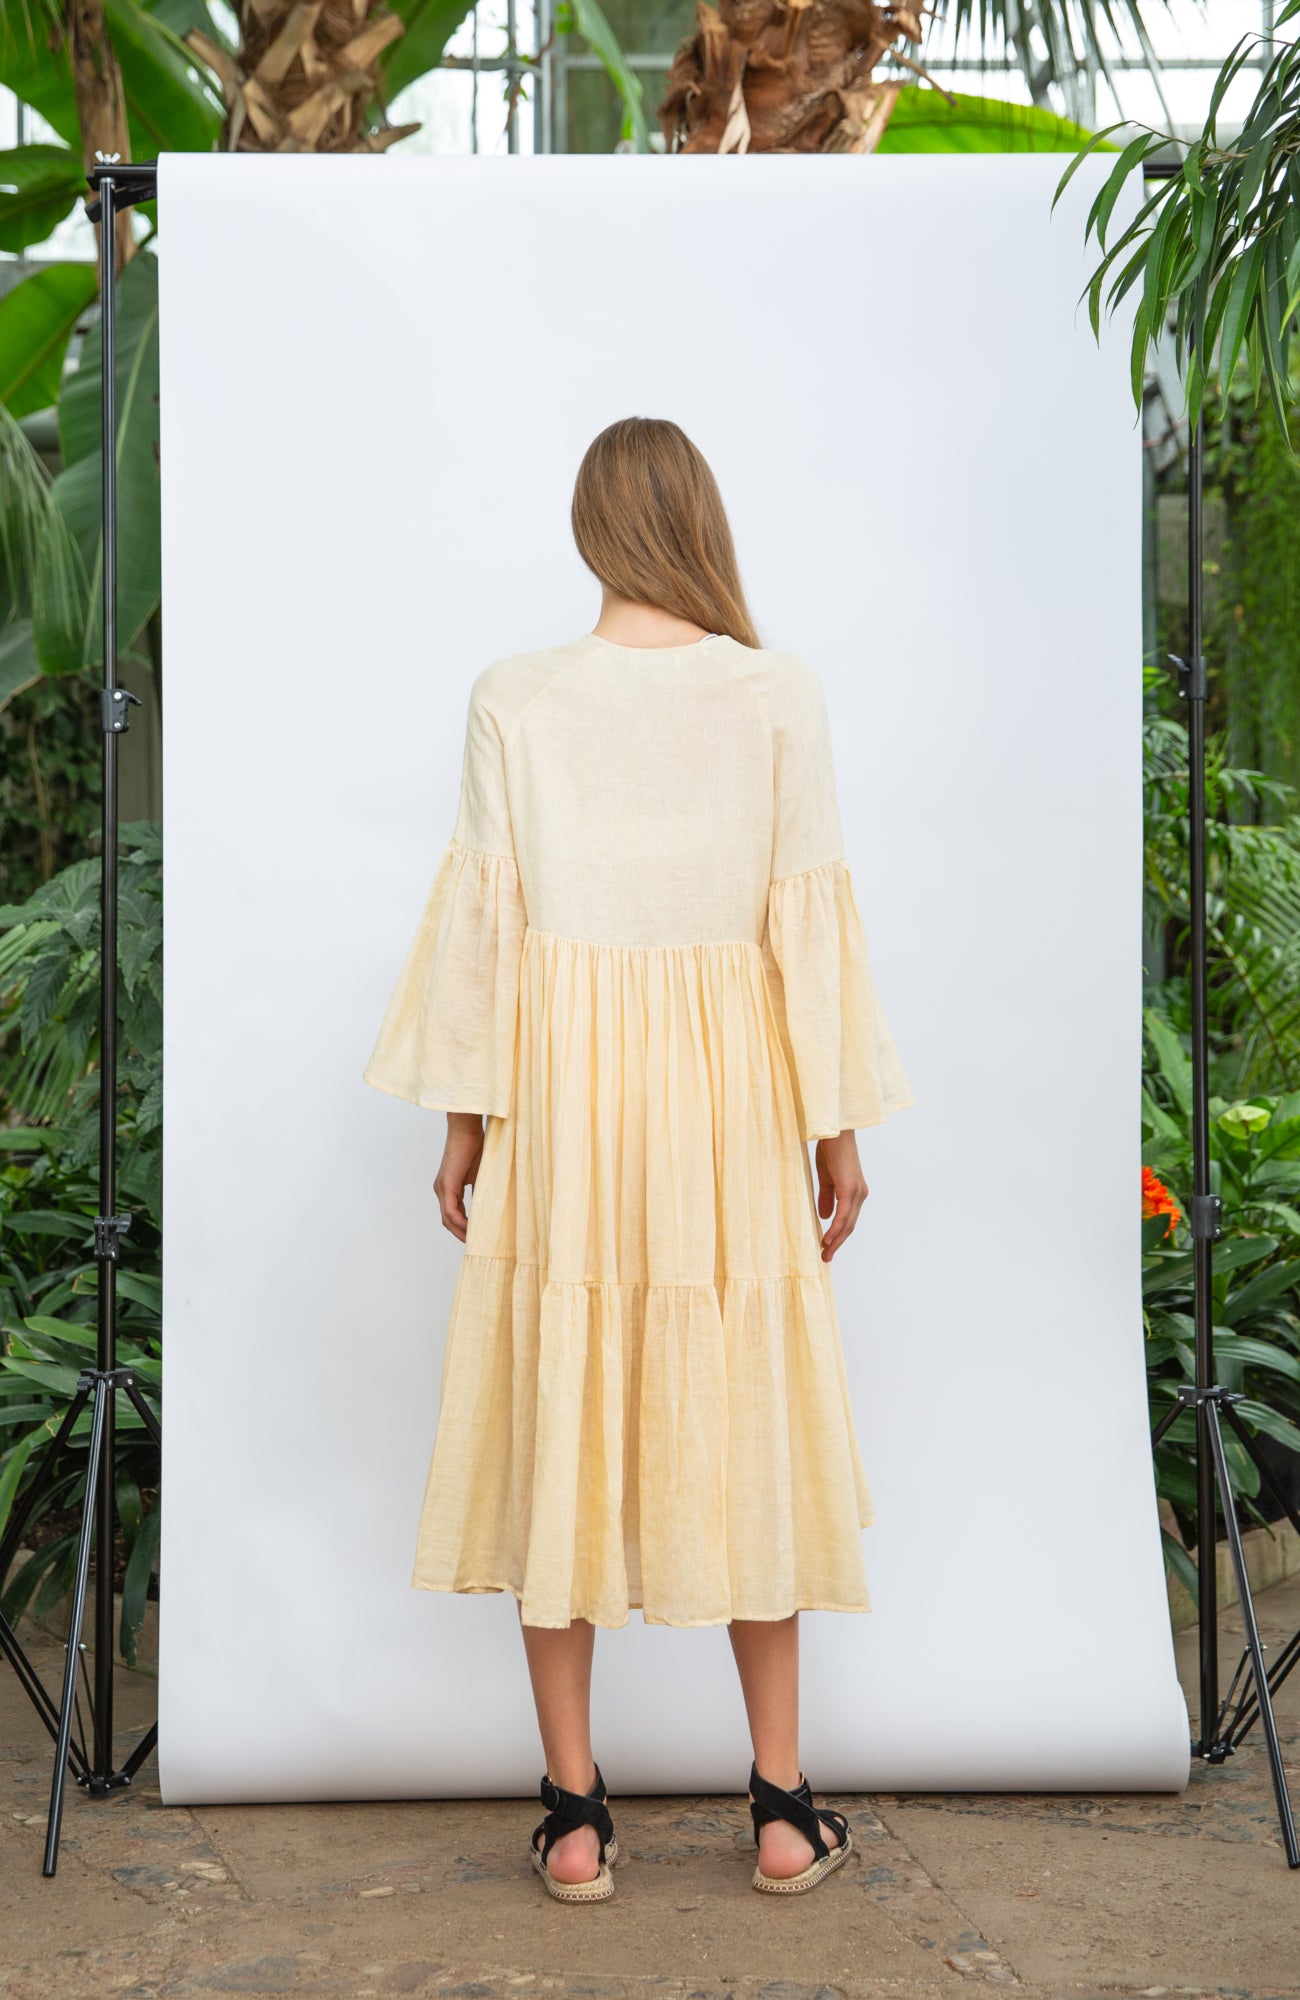 A Mere Co. - Saskia dress - Beige - Size S